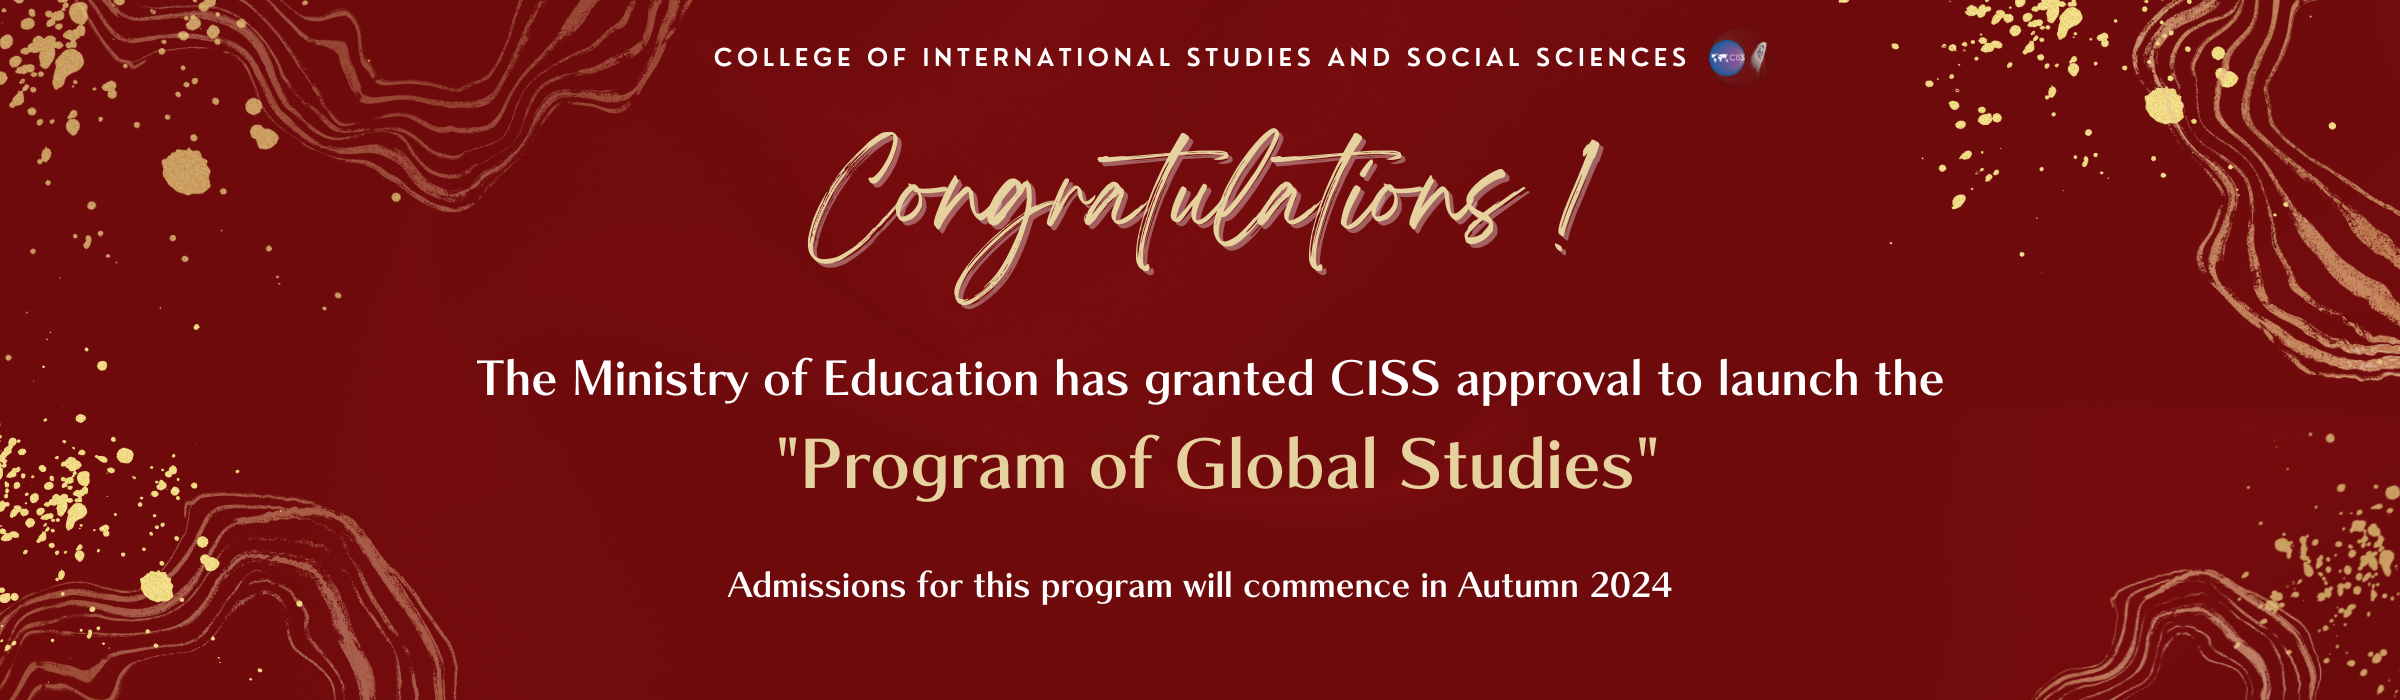 program-of-global-studies-banner_en-new